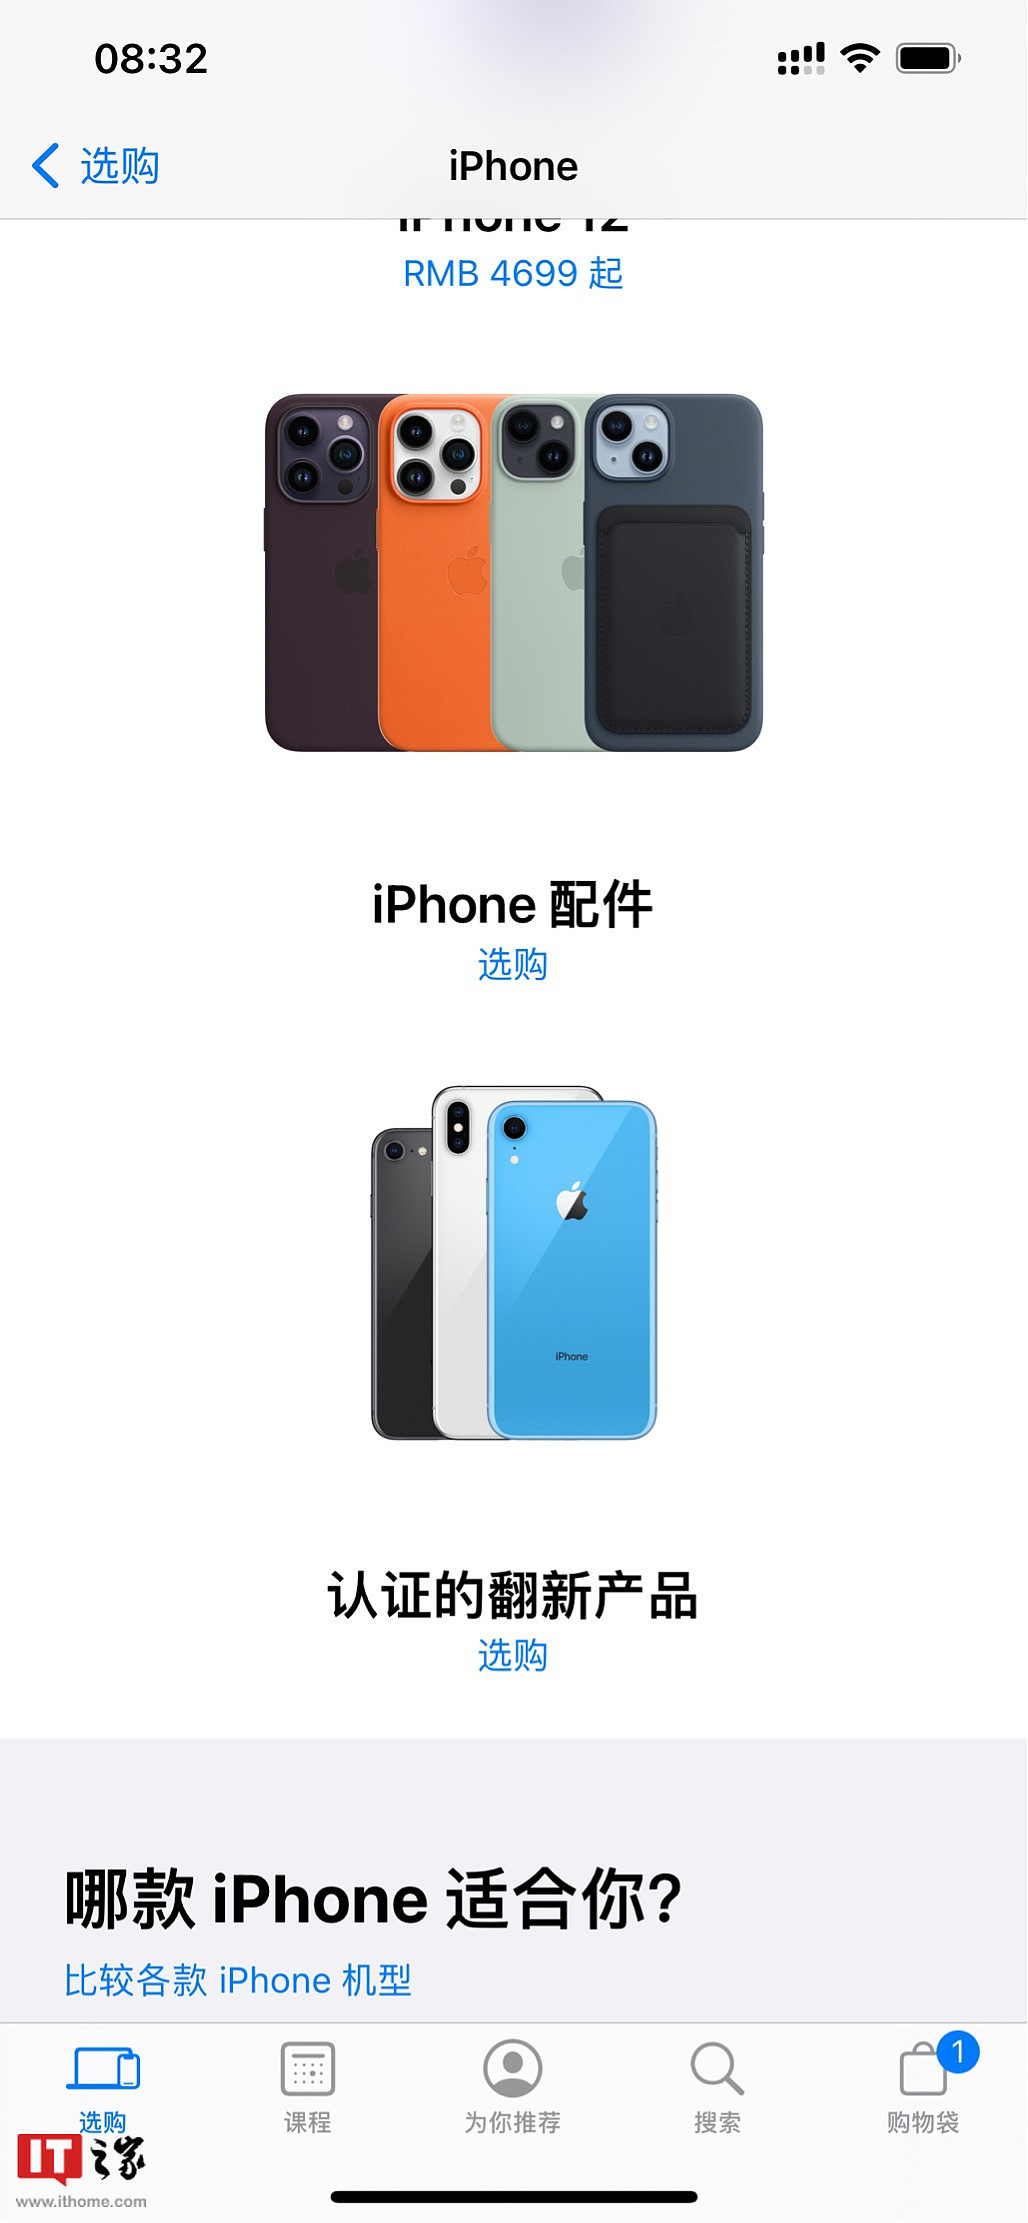 iPhone 14 / Pro 发布预售期间，苹果中国曾短暂上线 iPhone 翻新机选购页面 - 1